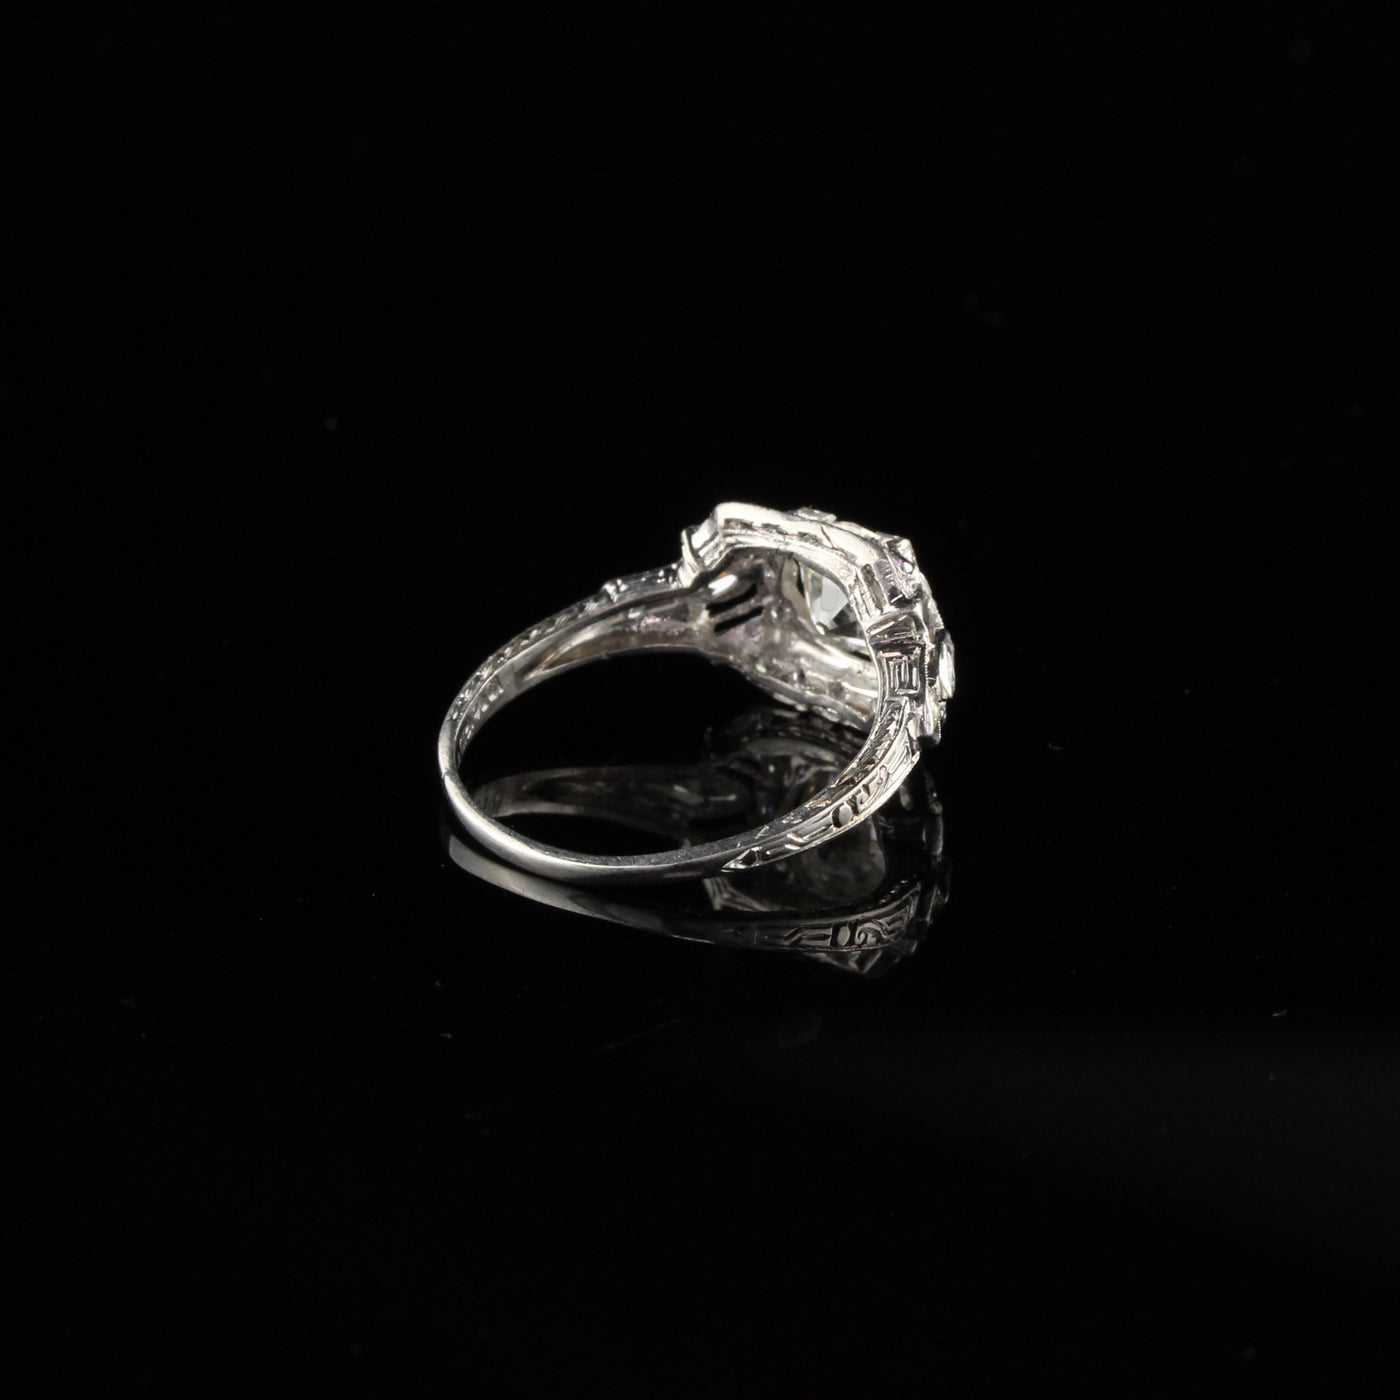 Antique Art Deco Platinum Engagement Ring - Size 6 3/4